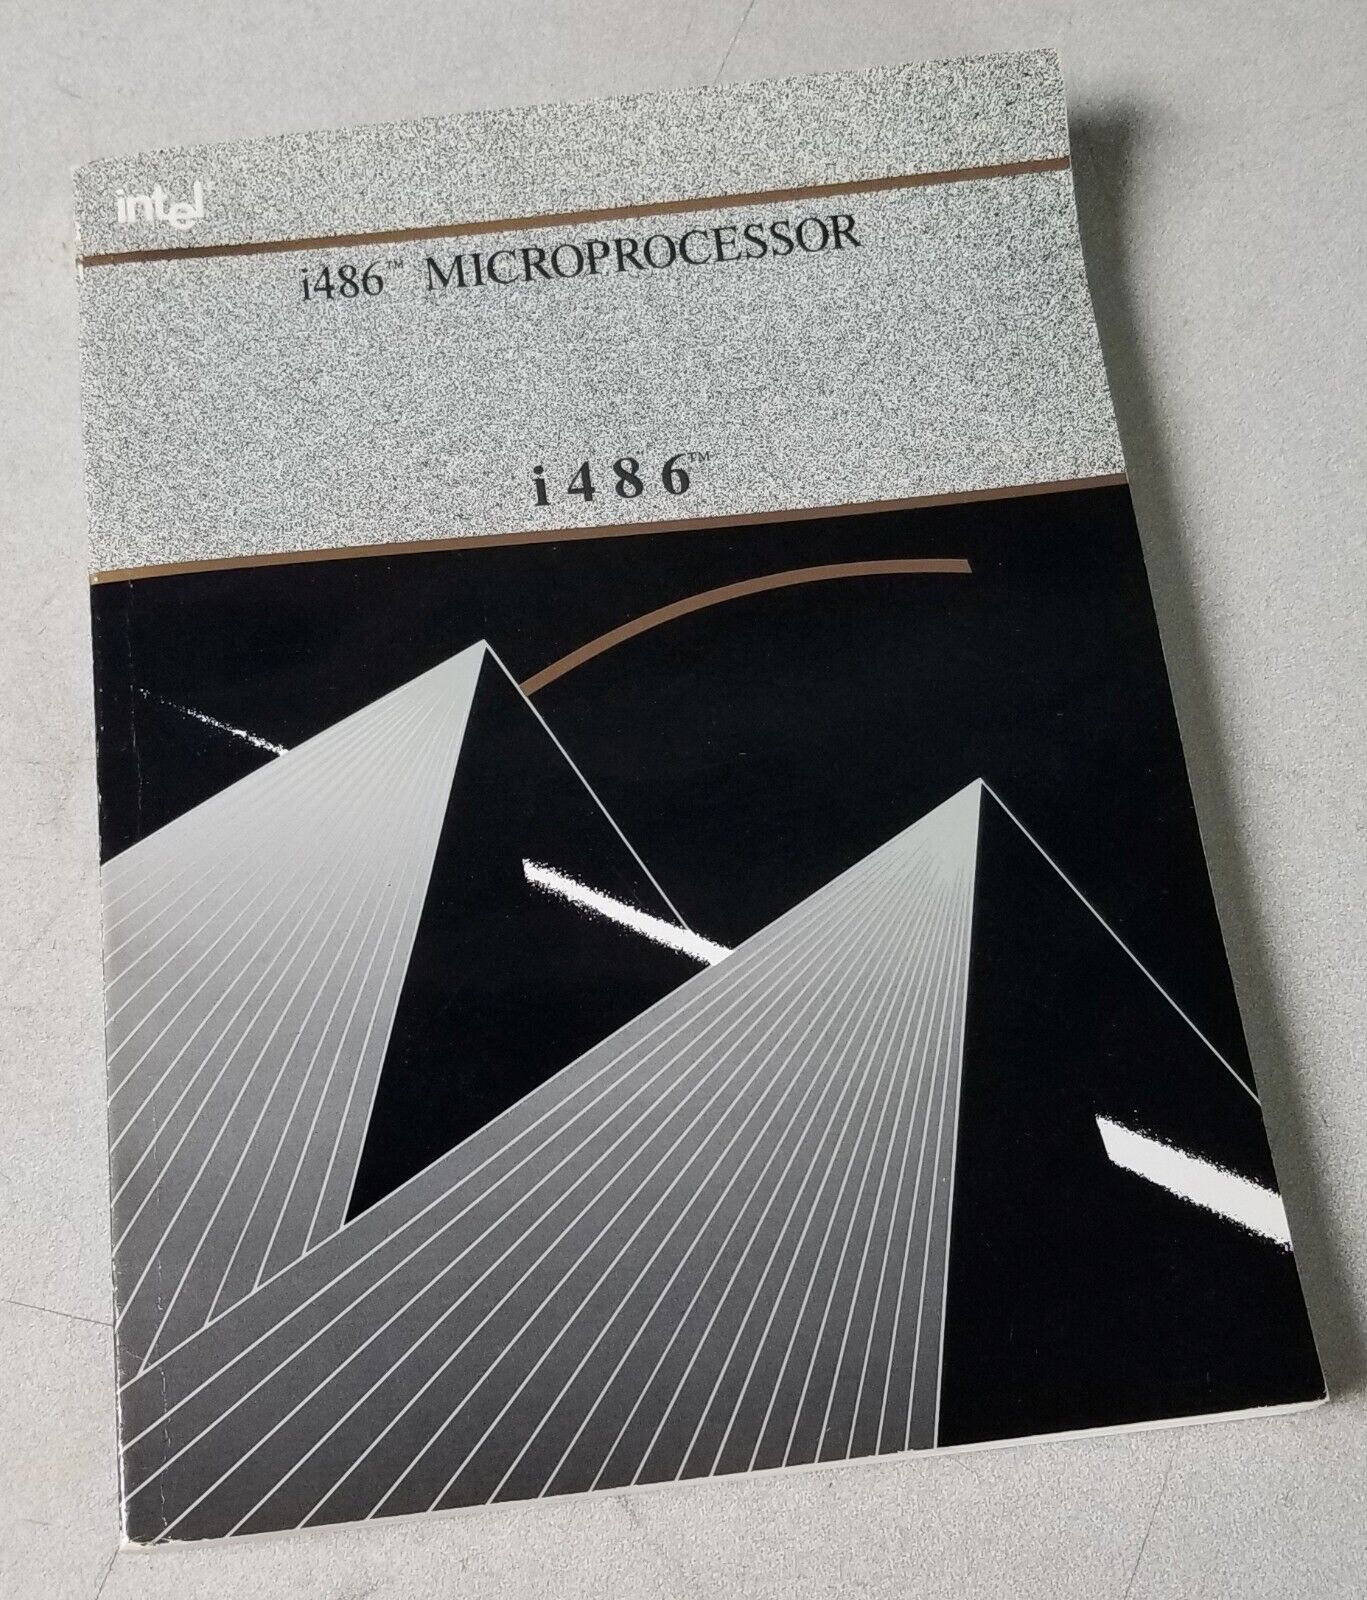 Original Intel i486 Microprocessor book 1989 1-55512-084-9